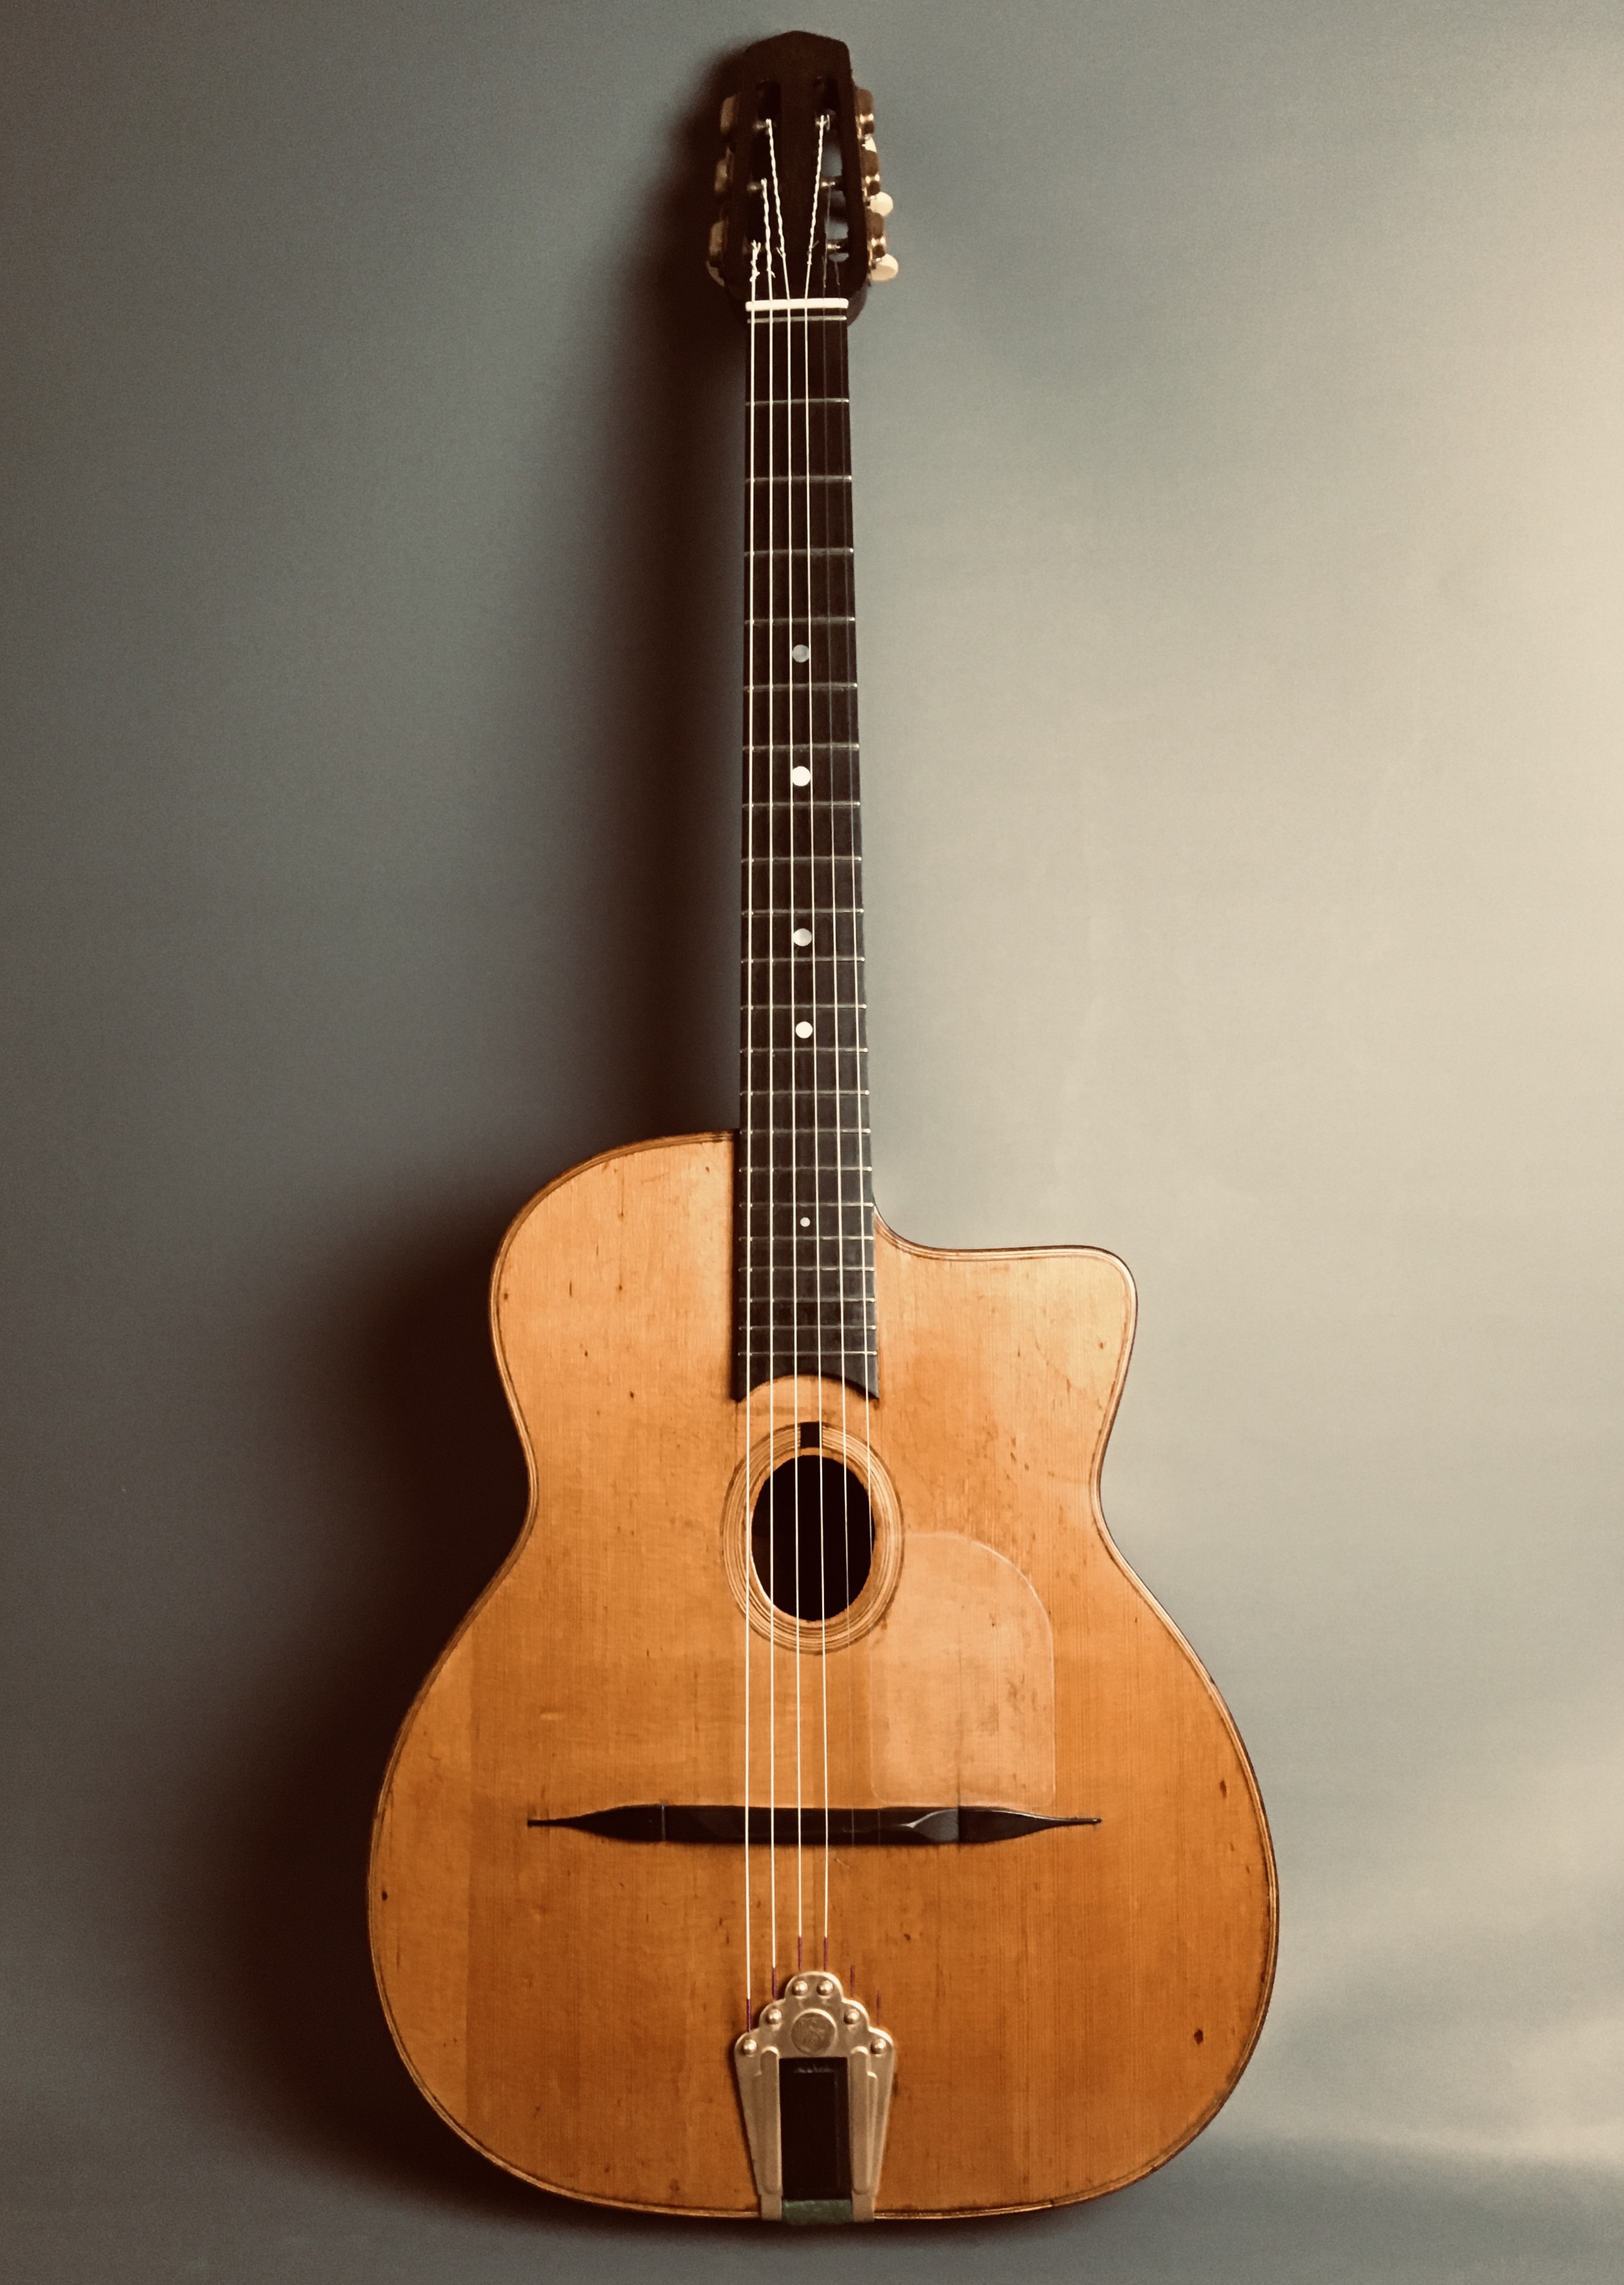 Selmer Guitare nr.833